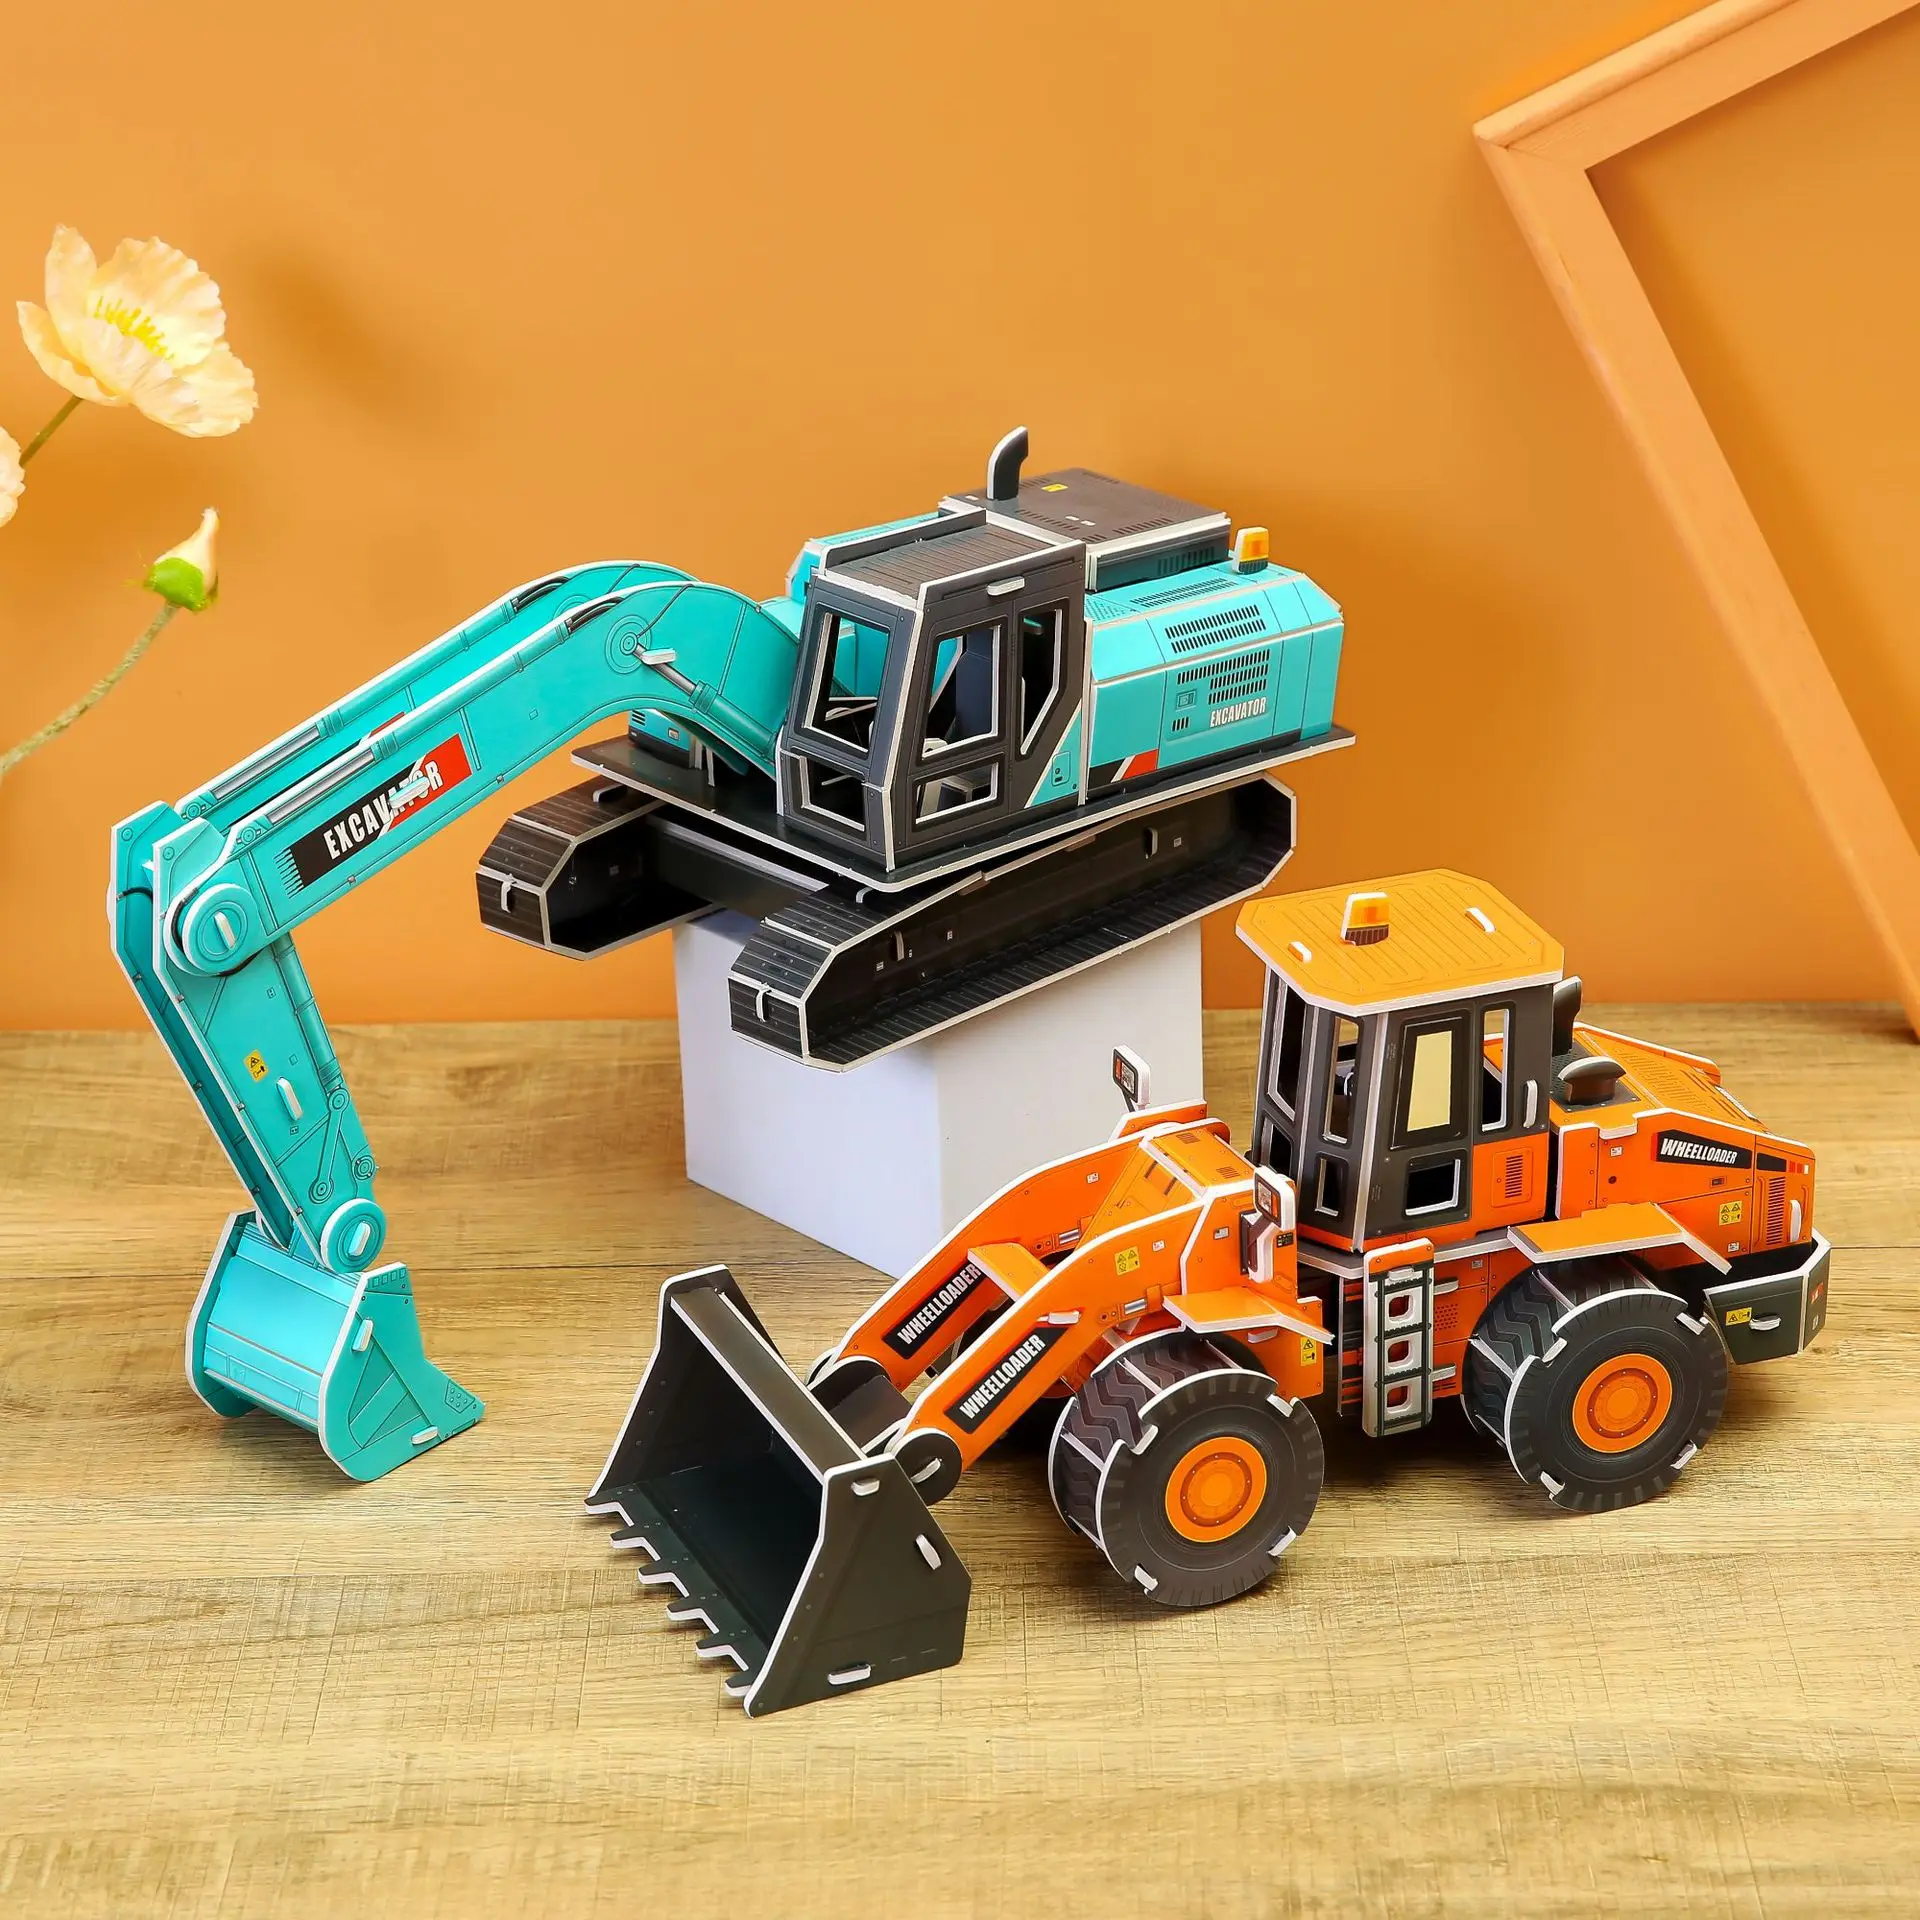 Education Hobby Gift Toy Excavator